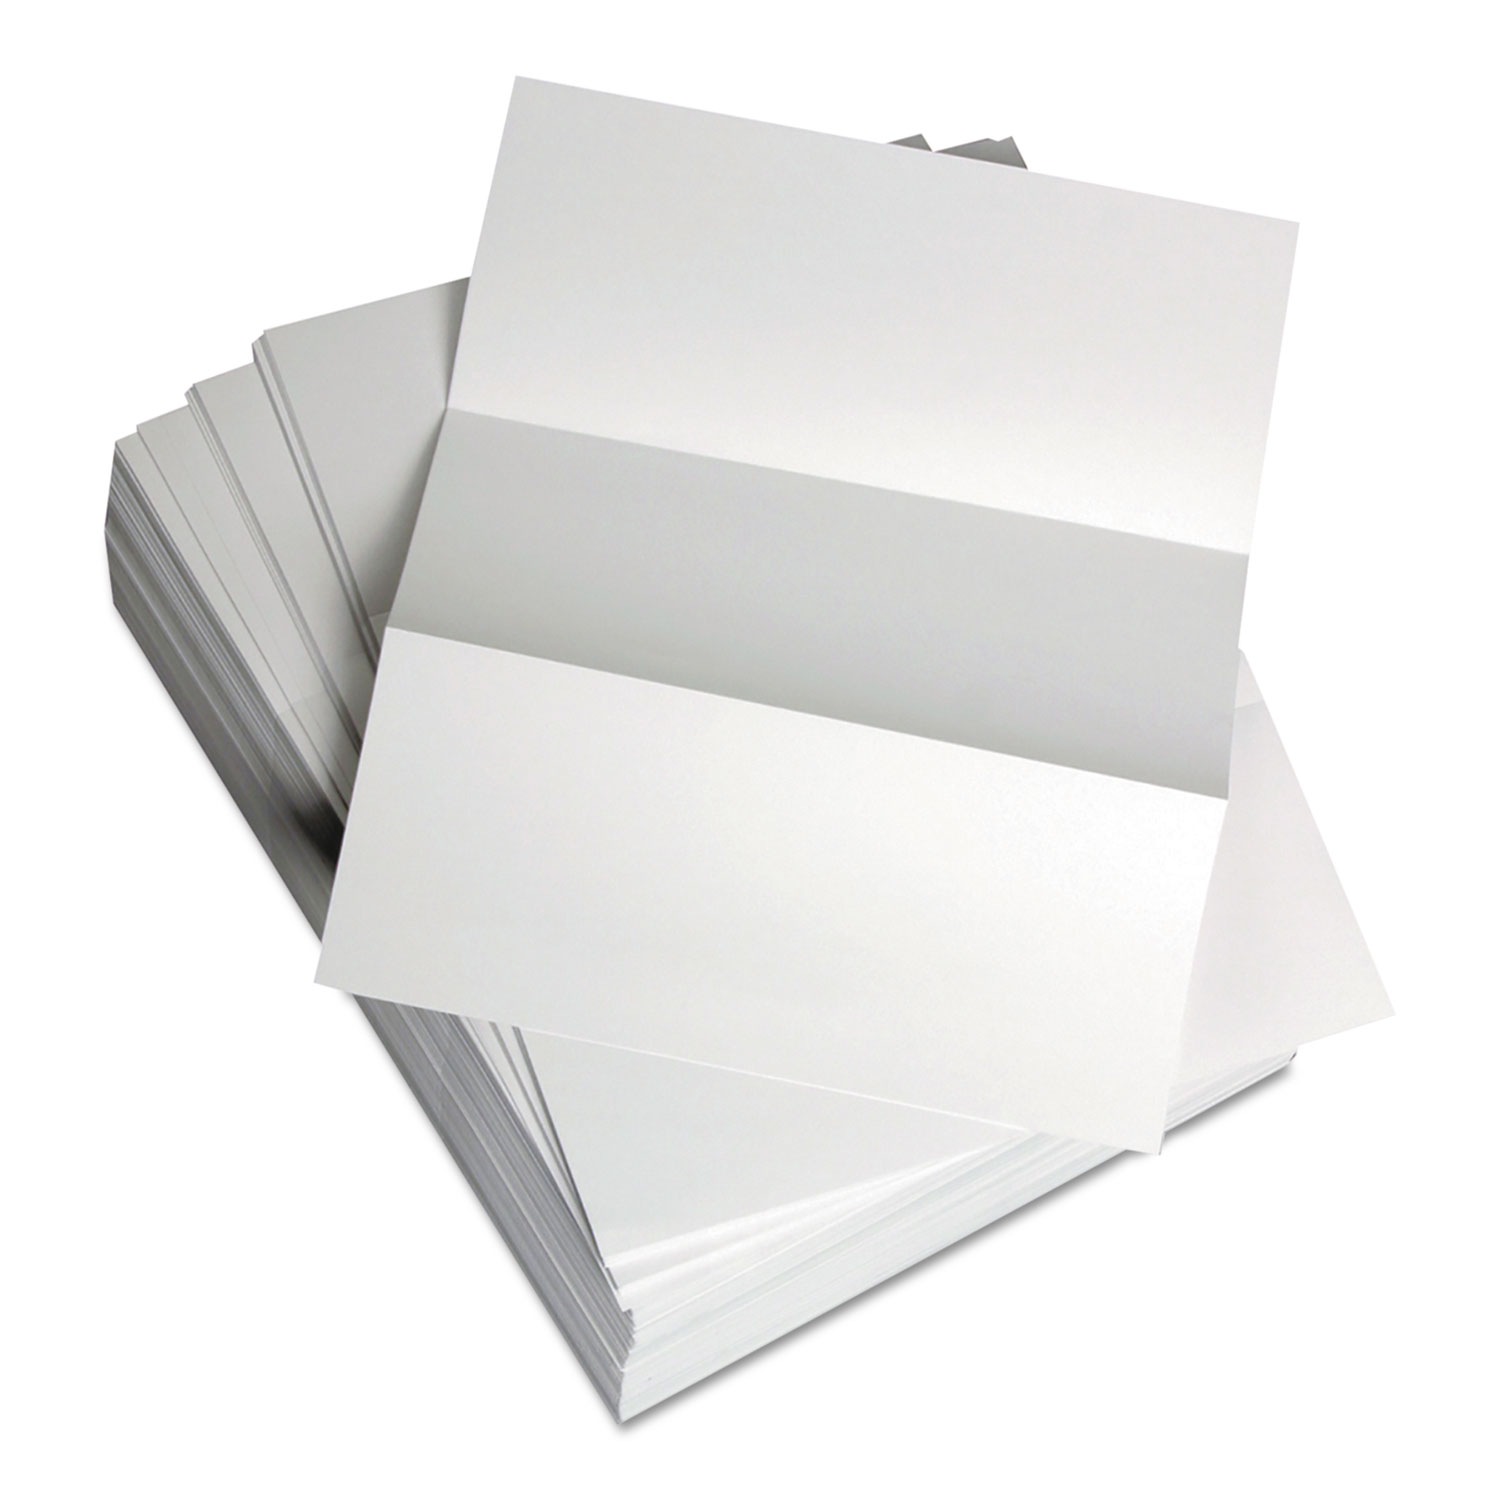  Domtar 851332 Custom Cut-Sheet Copy Paper, 92 Bright, 20lb, 8.5 x 11, White, 500/Ream (DMR851332) 